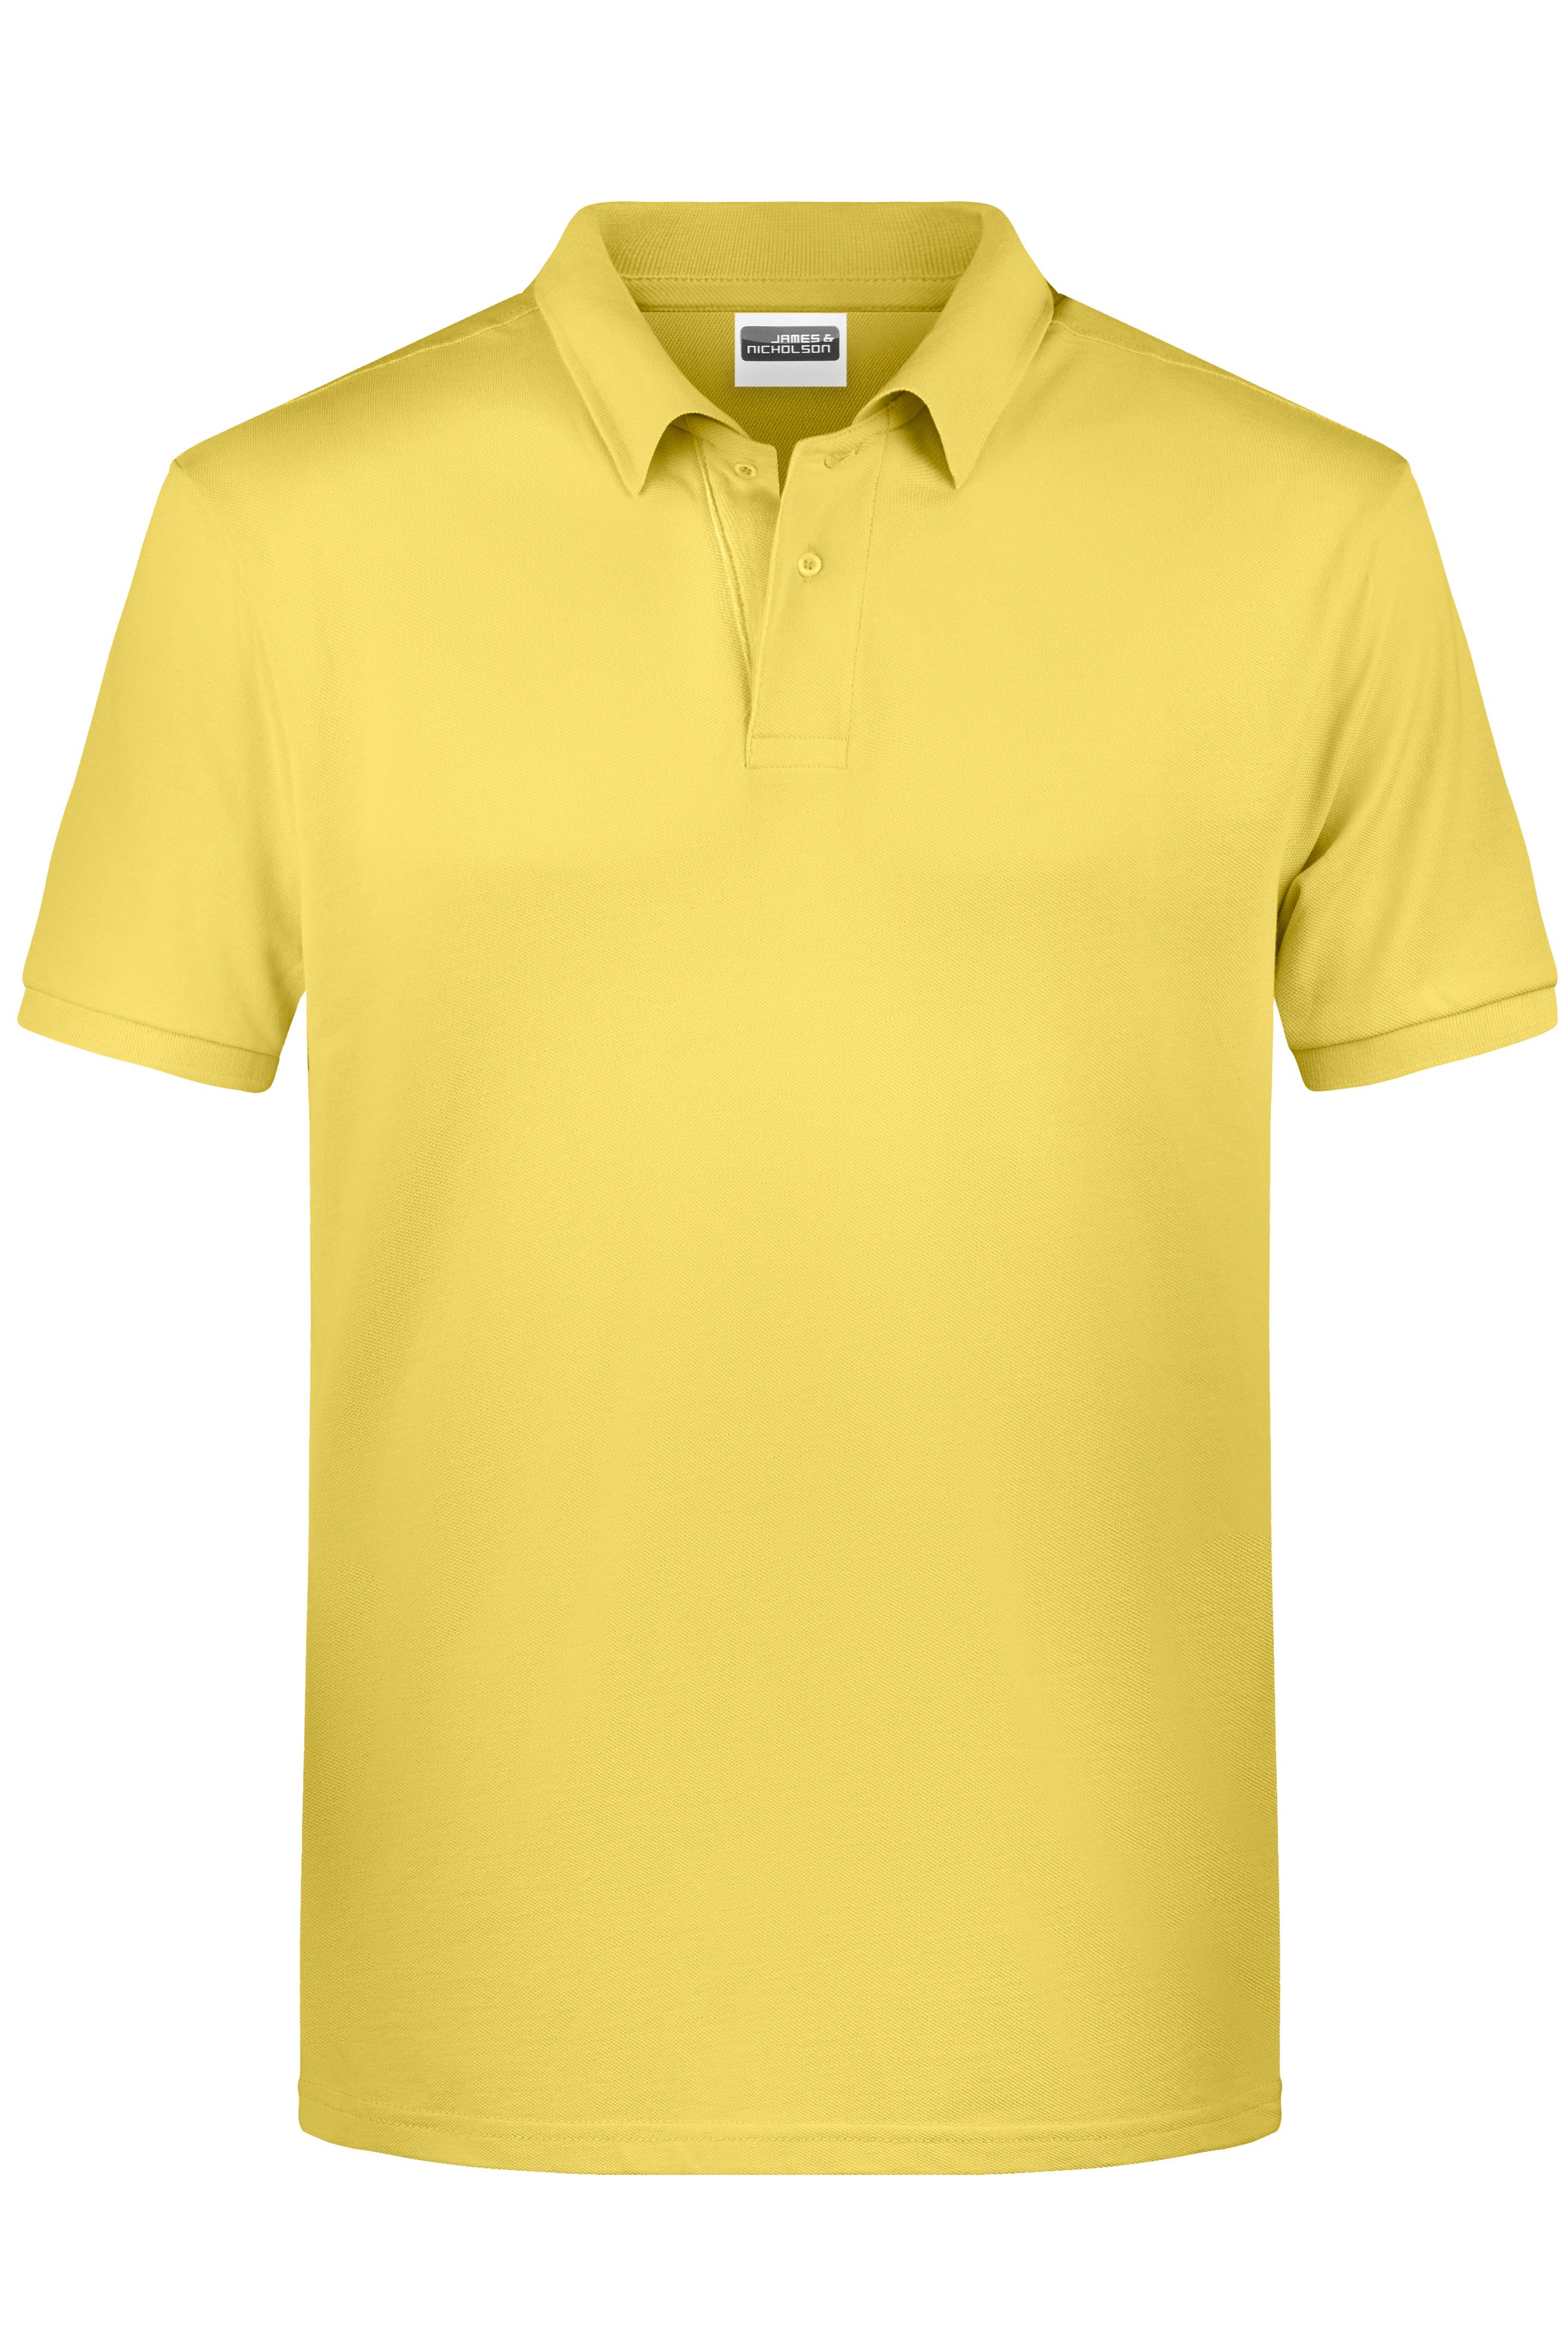 Men's Basic Polo 8010 Klassisches Poloshirt